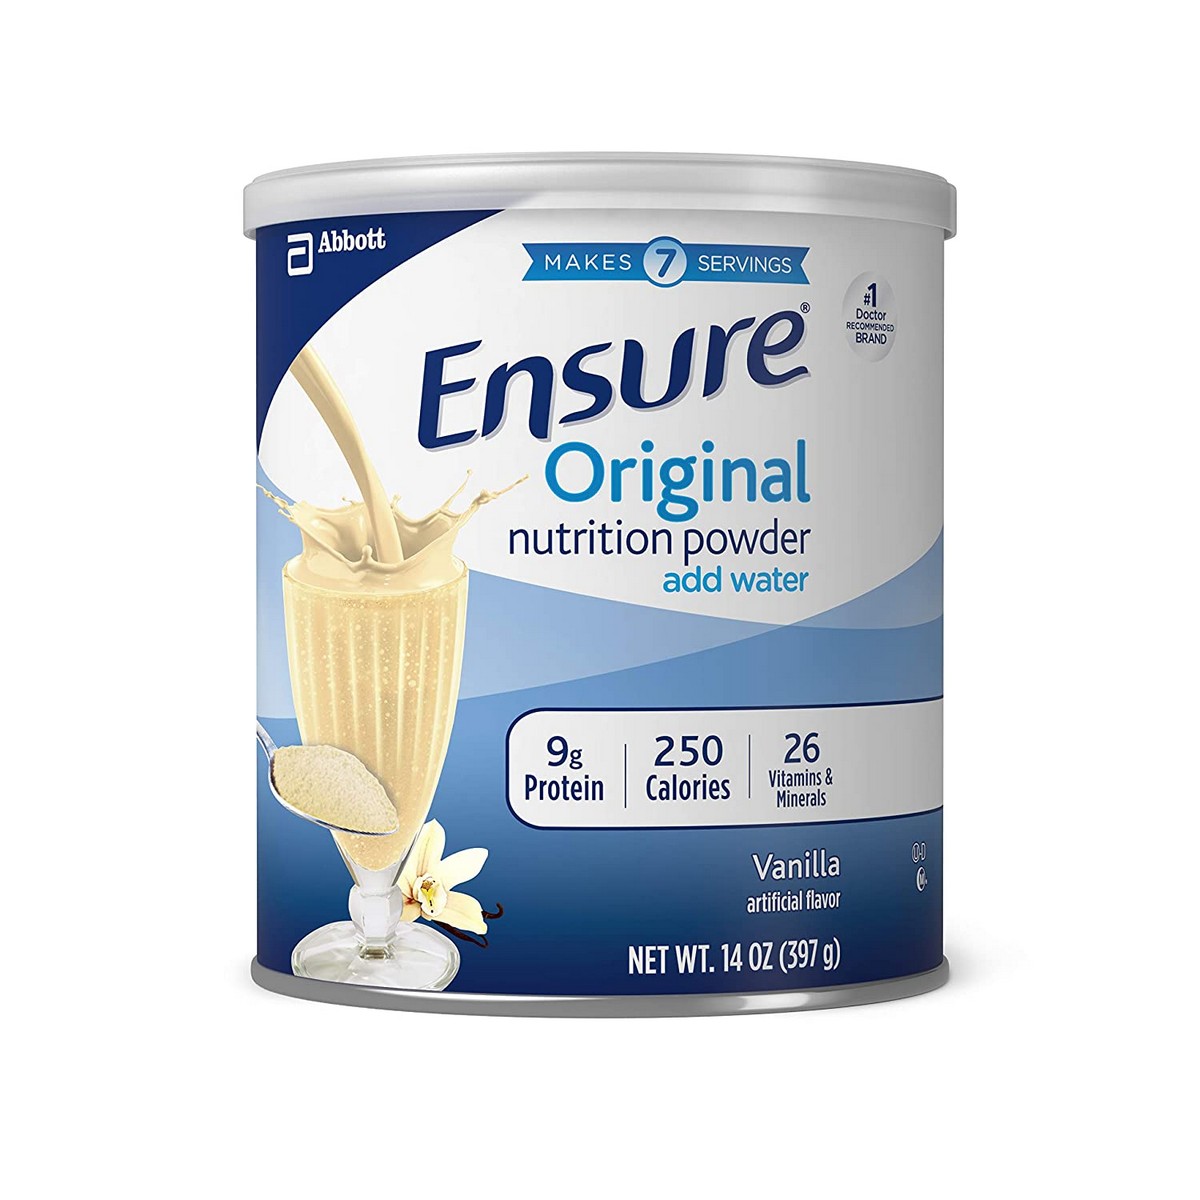 Ensure Nutrivigor Vanilla Flavour Nutritional Protein Shake Powder